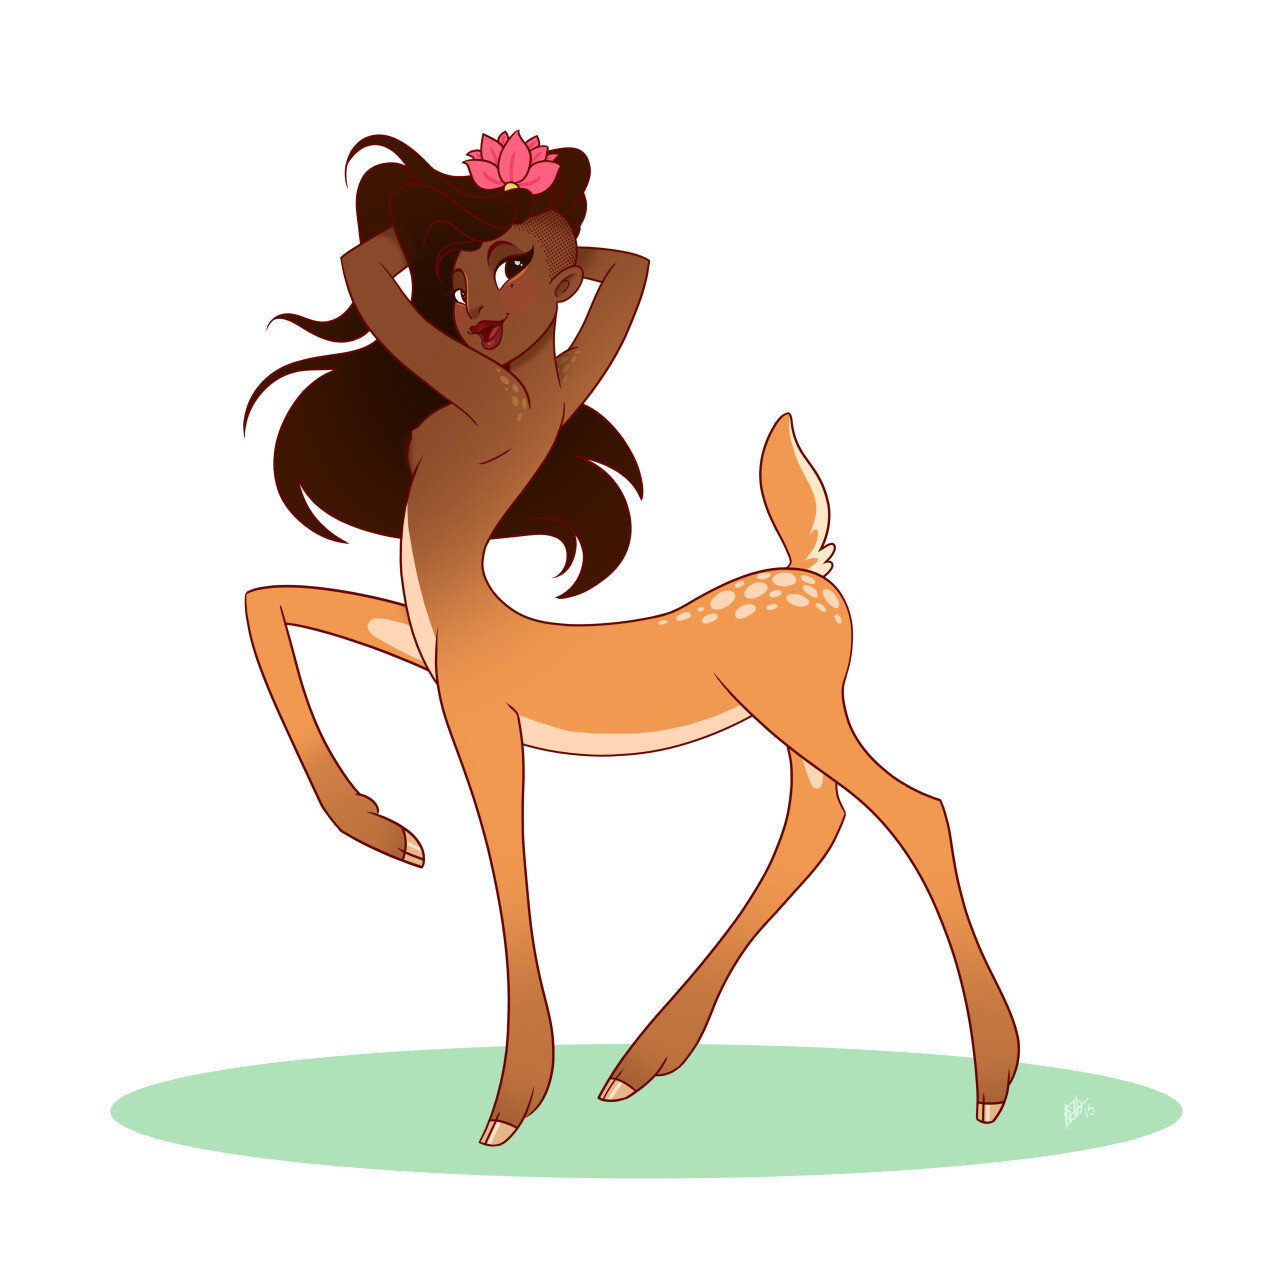 A cheeky little centaur!